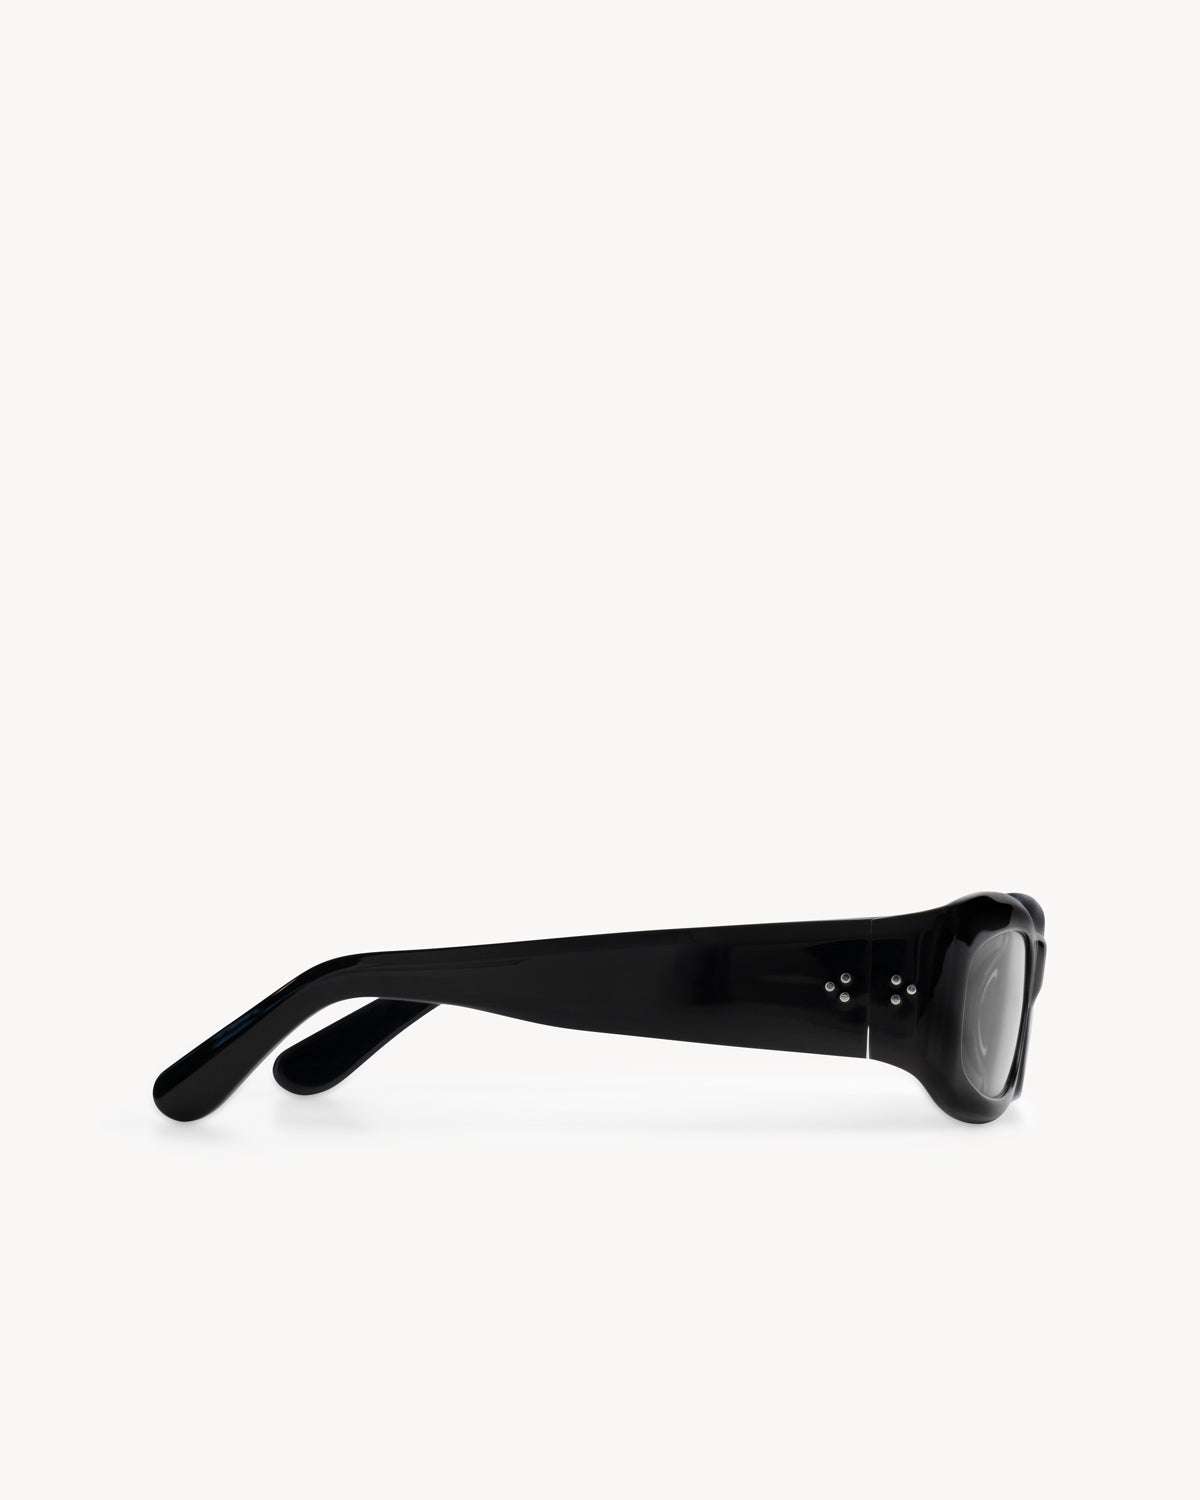 Port Tanger Saudade Sunglasses in Black Acetate and Black Lenses 4